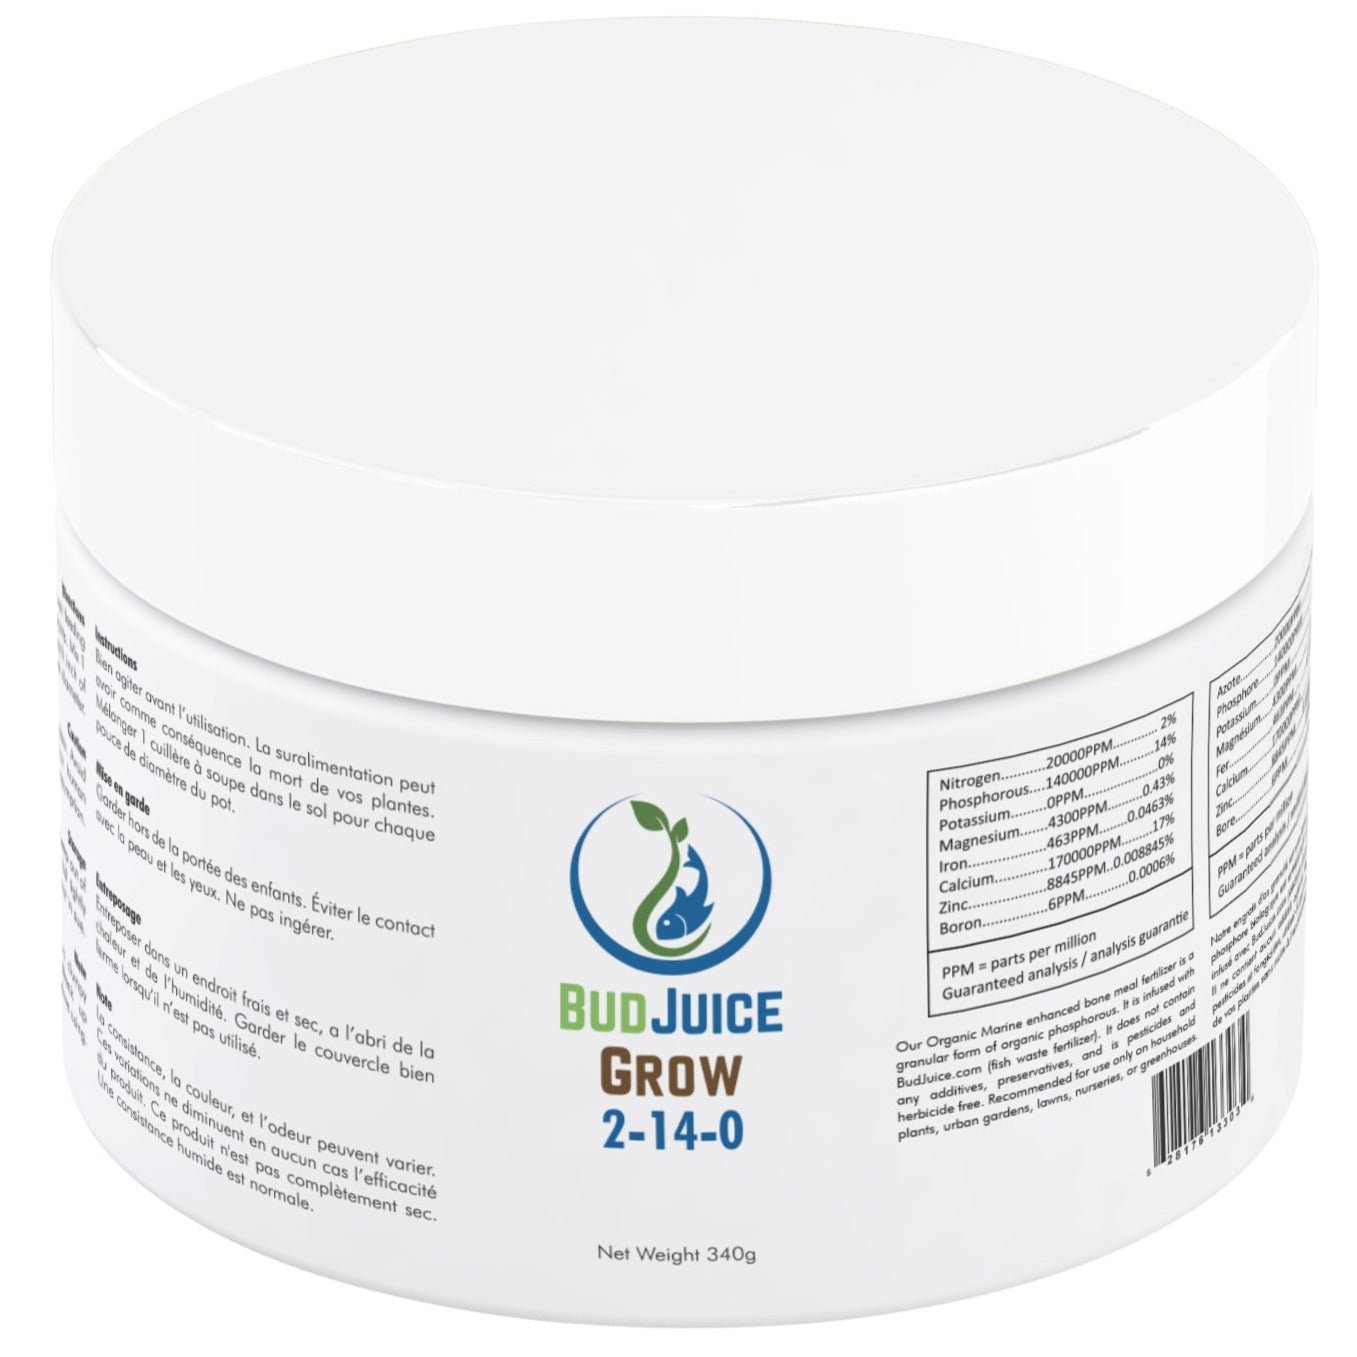 BUDJUICE - Grow 2-14-0 Organic Fertilizer Bone Meal Based Phosphorus - BudJuice